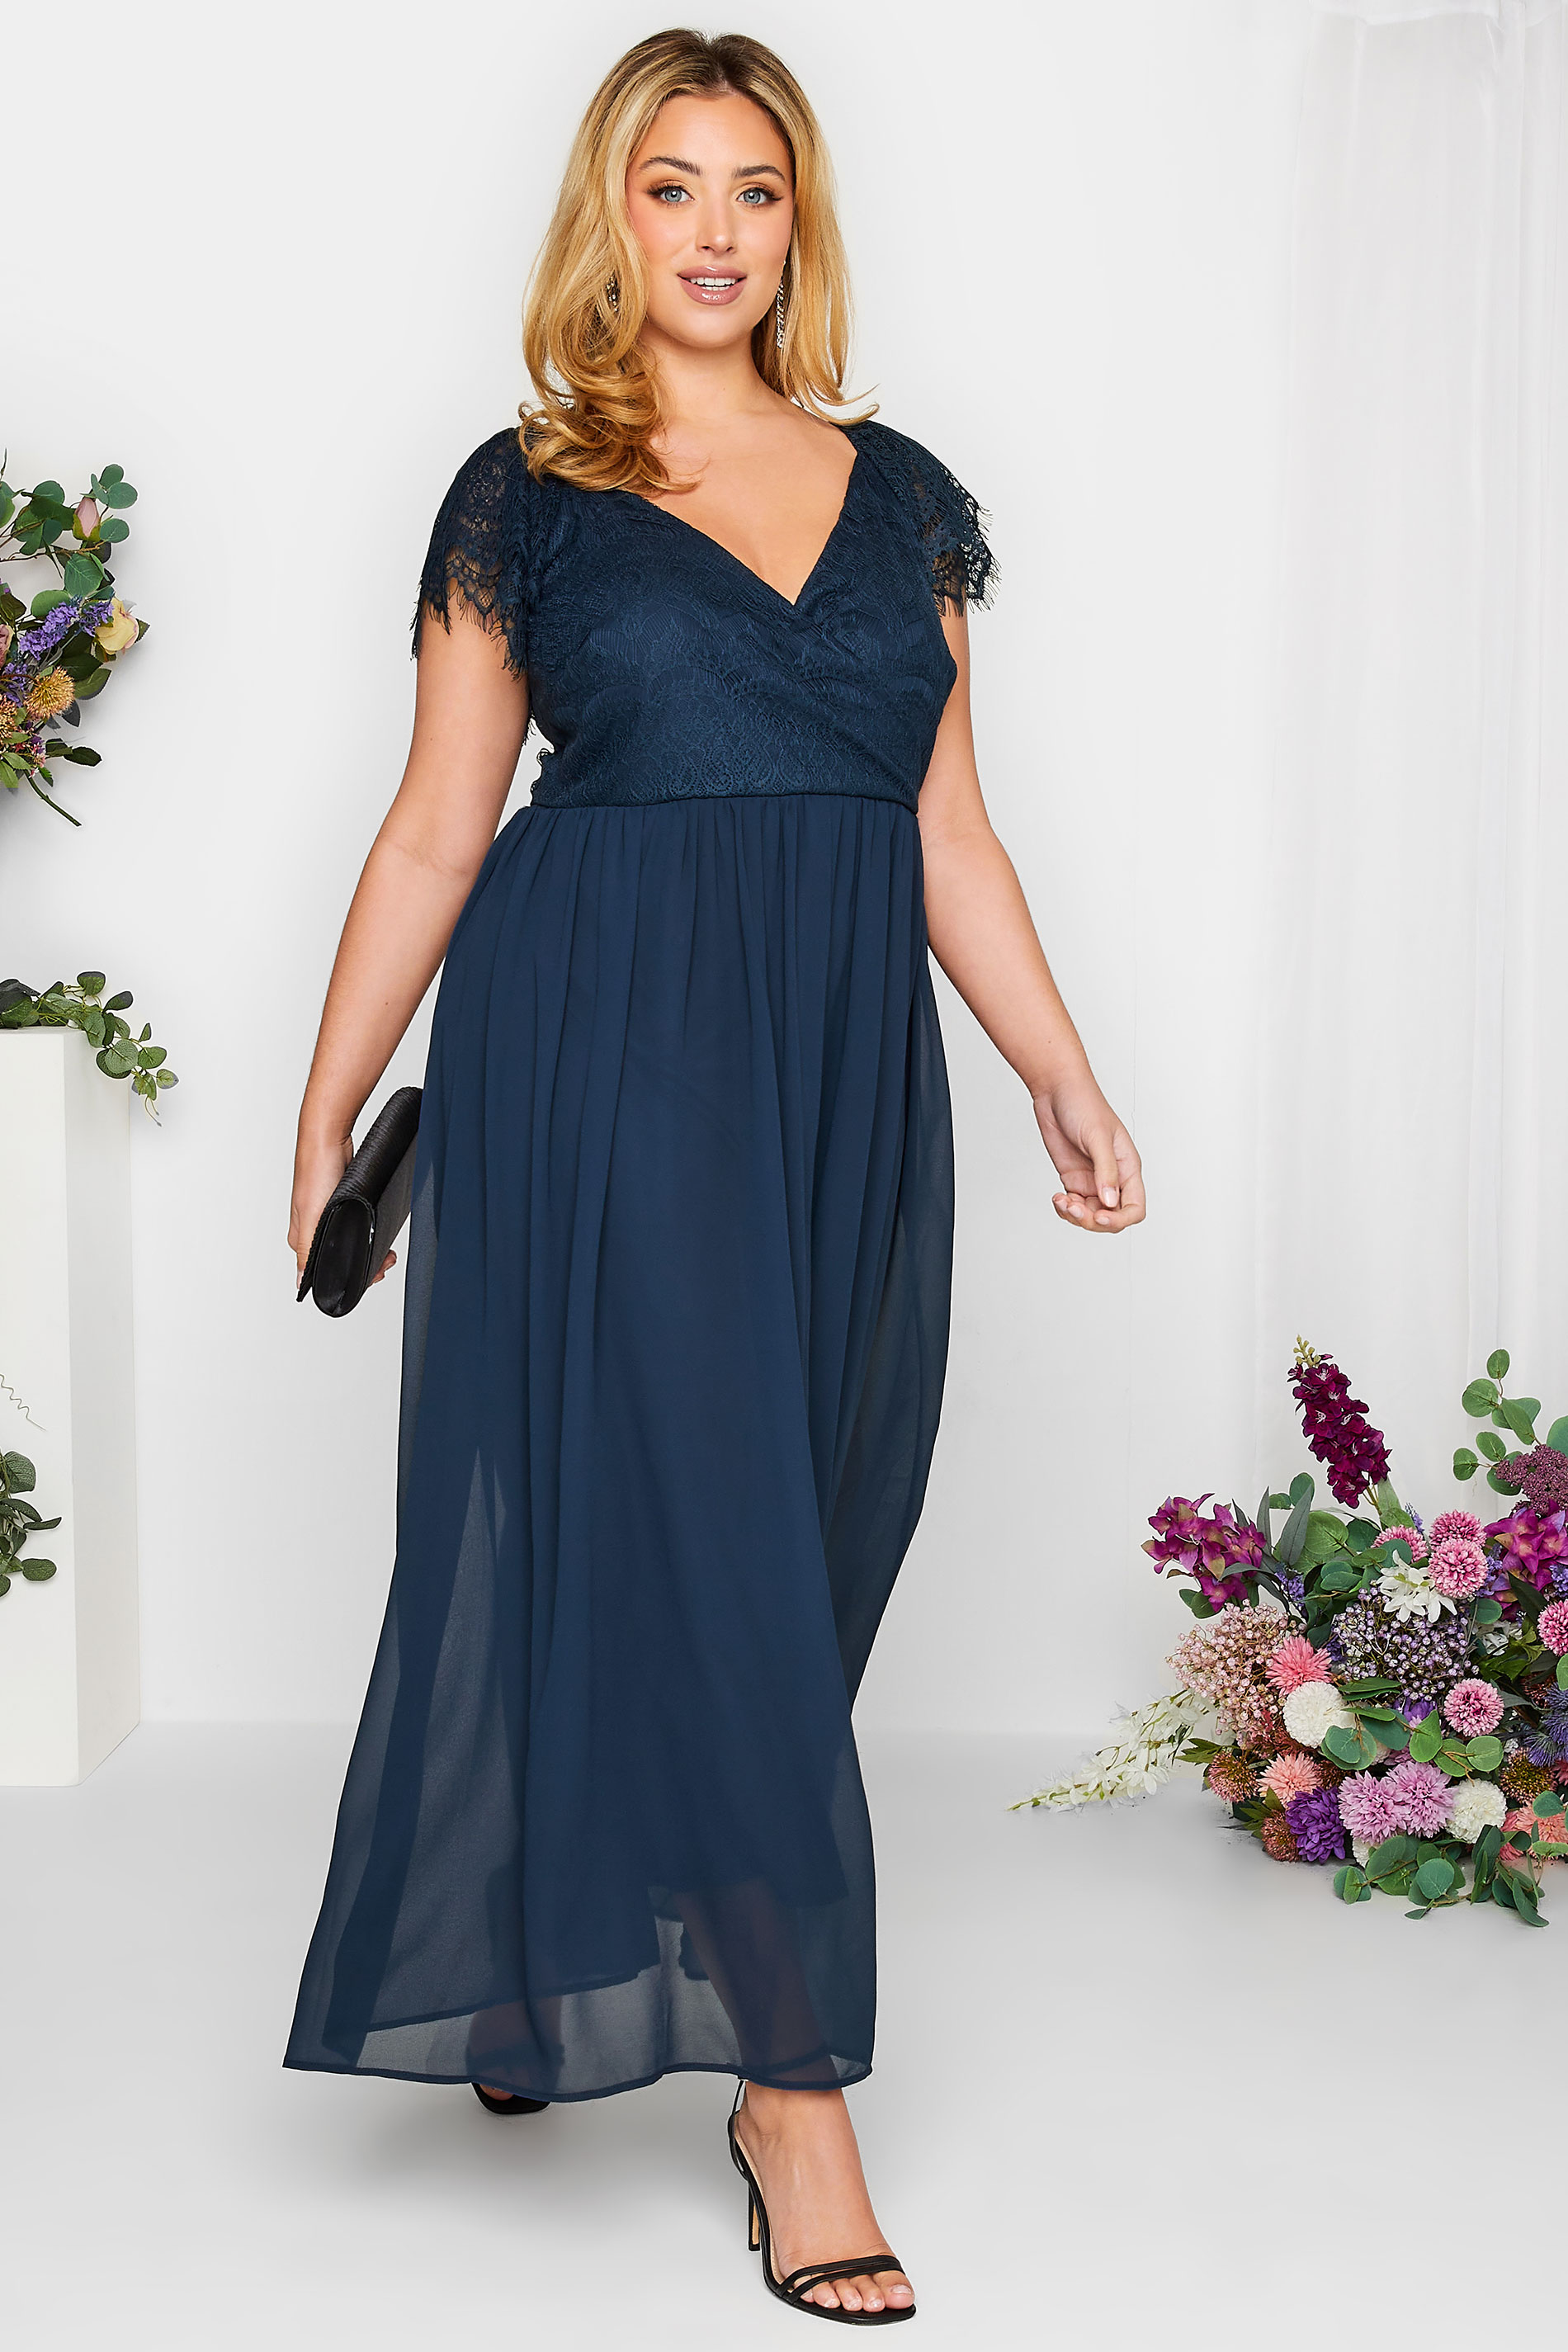 YOURS LONDON Plus Size Navy Blue Lace Detail Wrap Maxi Dress | Yours  Clothing